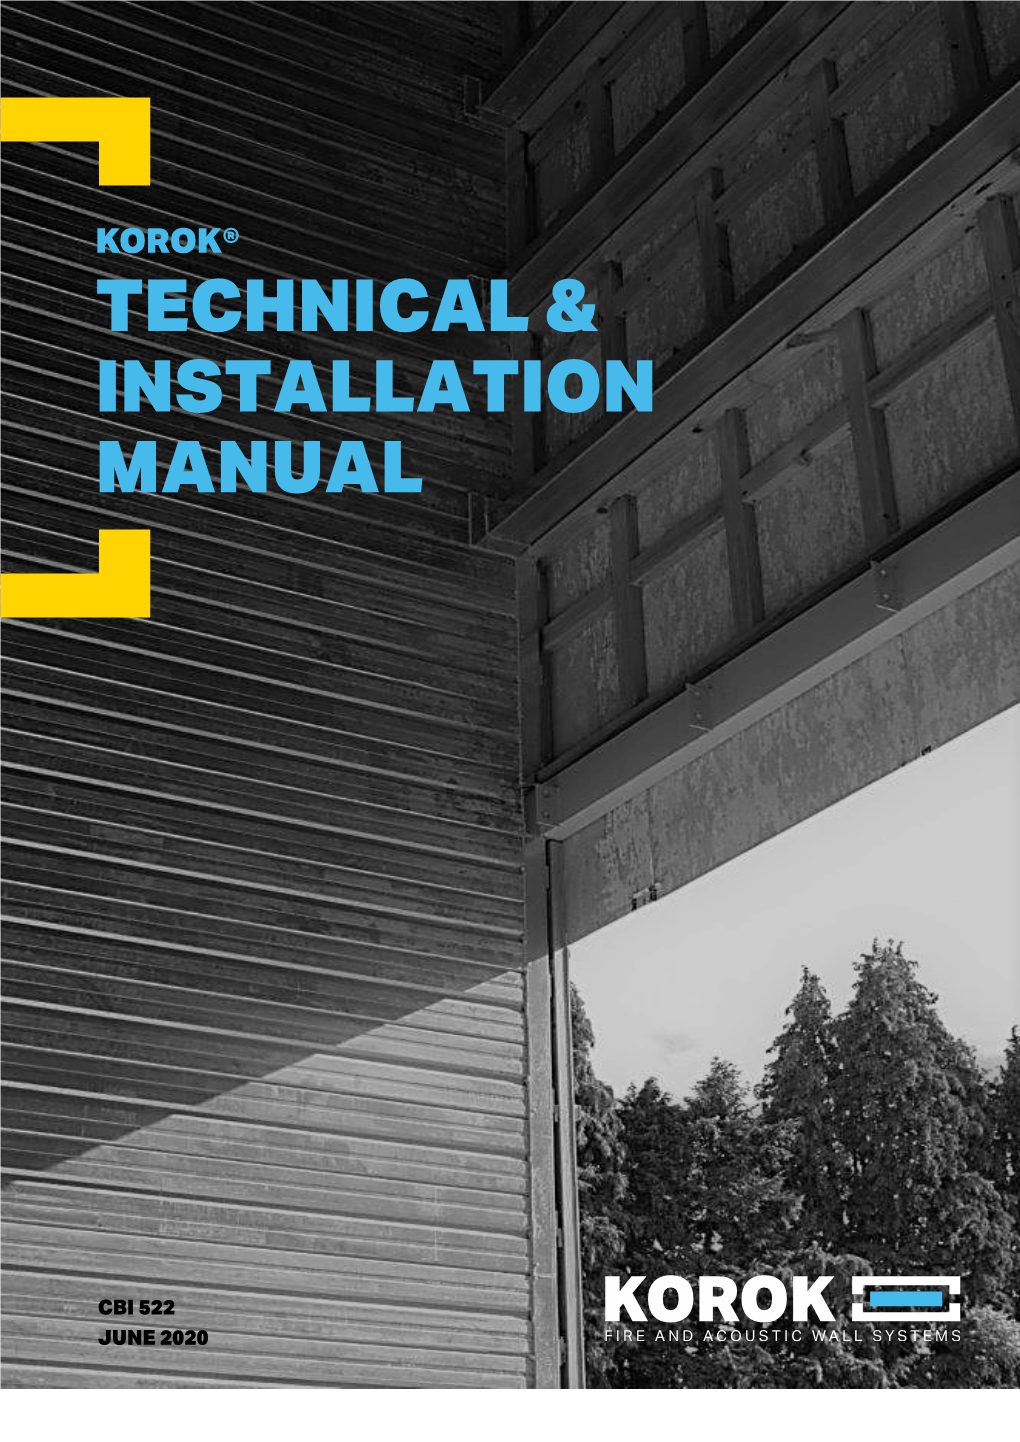 KOROK Technical & Installation Manual